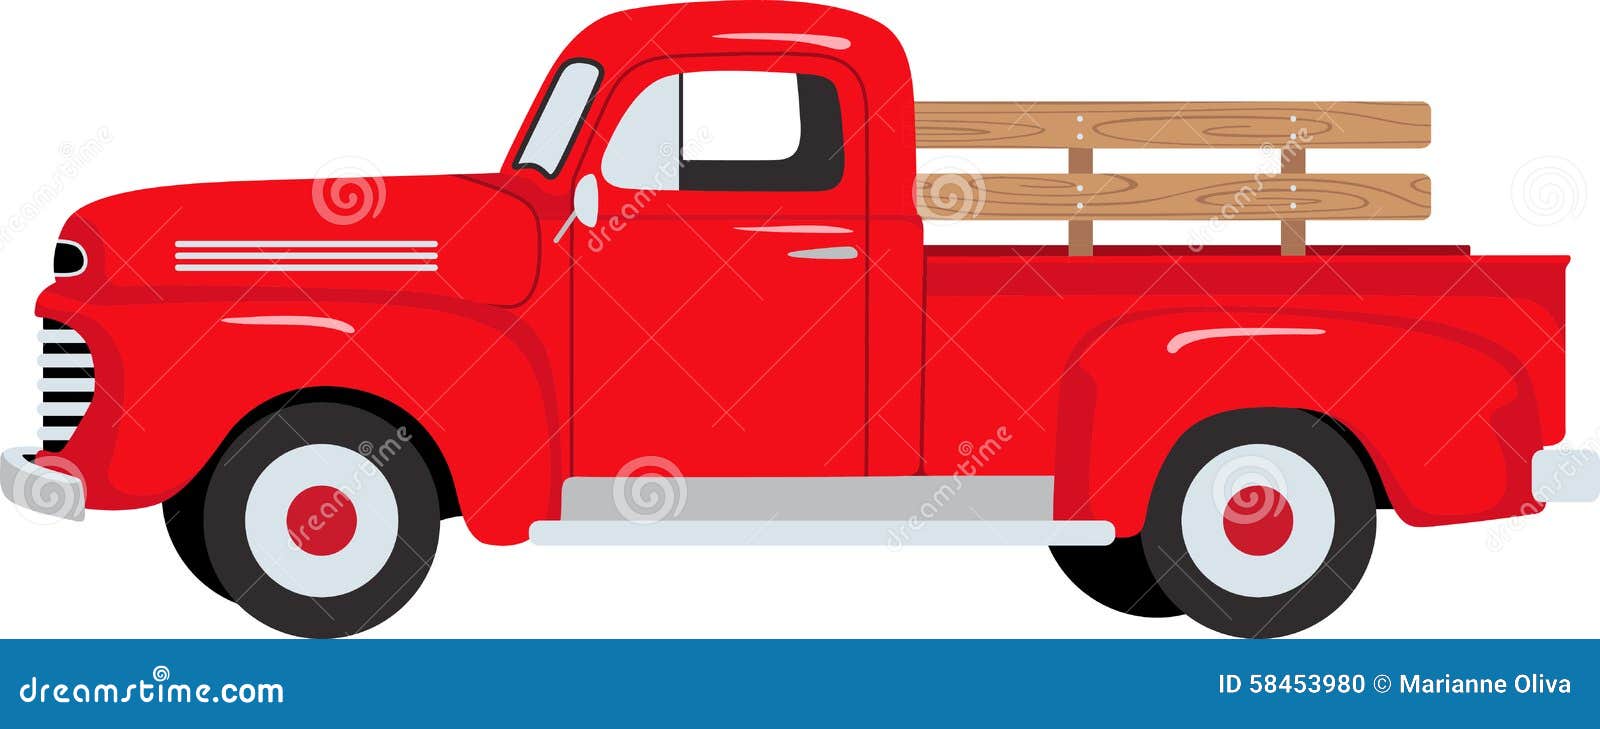 stock-photo-farmer-red-pickup-truck-image-58453980